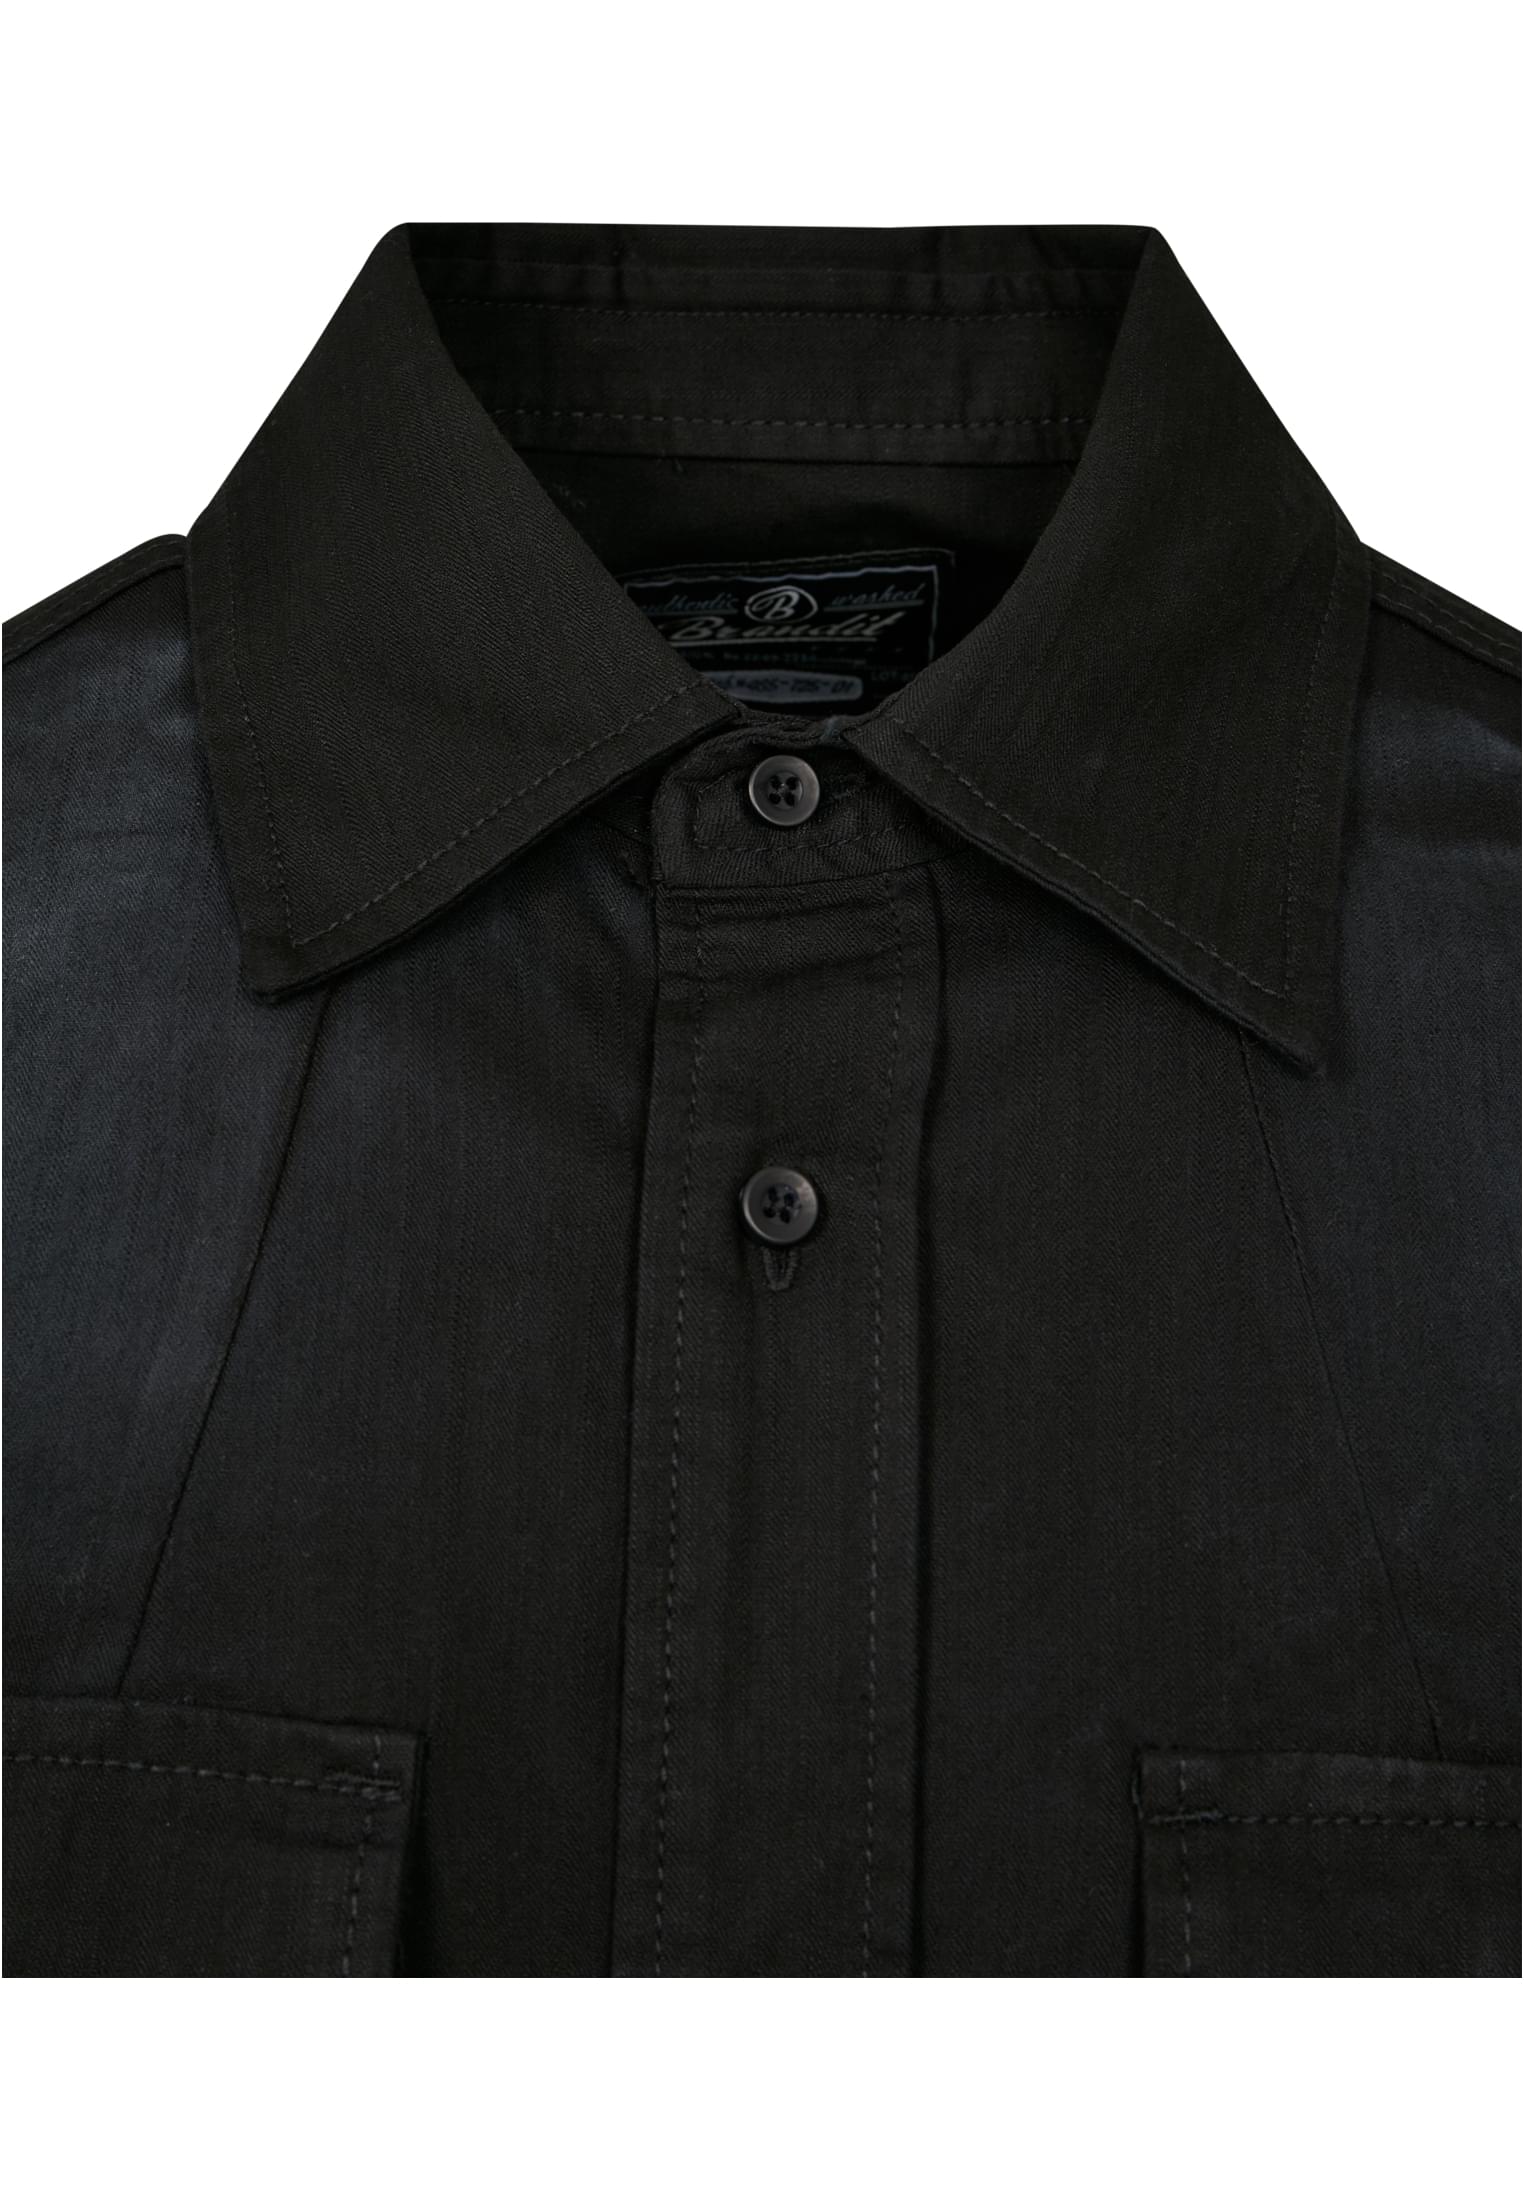 Hemden Hardee Denim Shirt in Farbe black